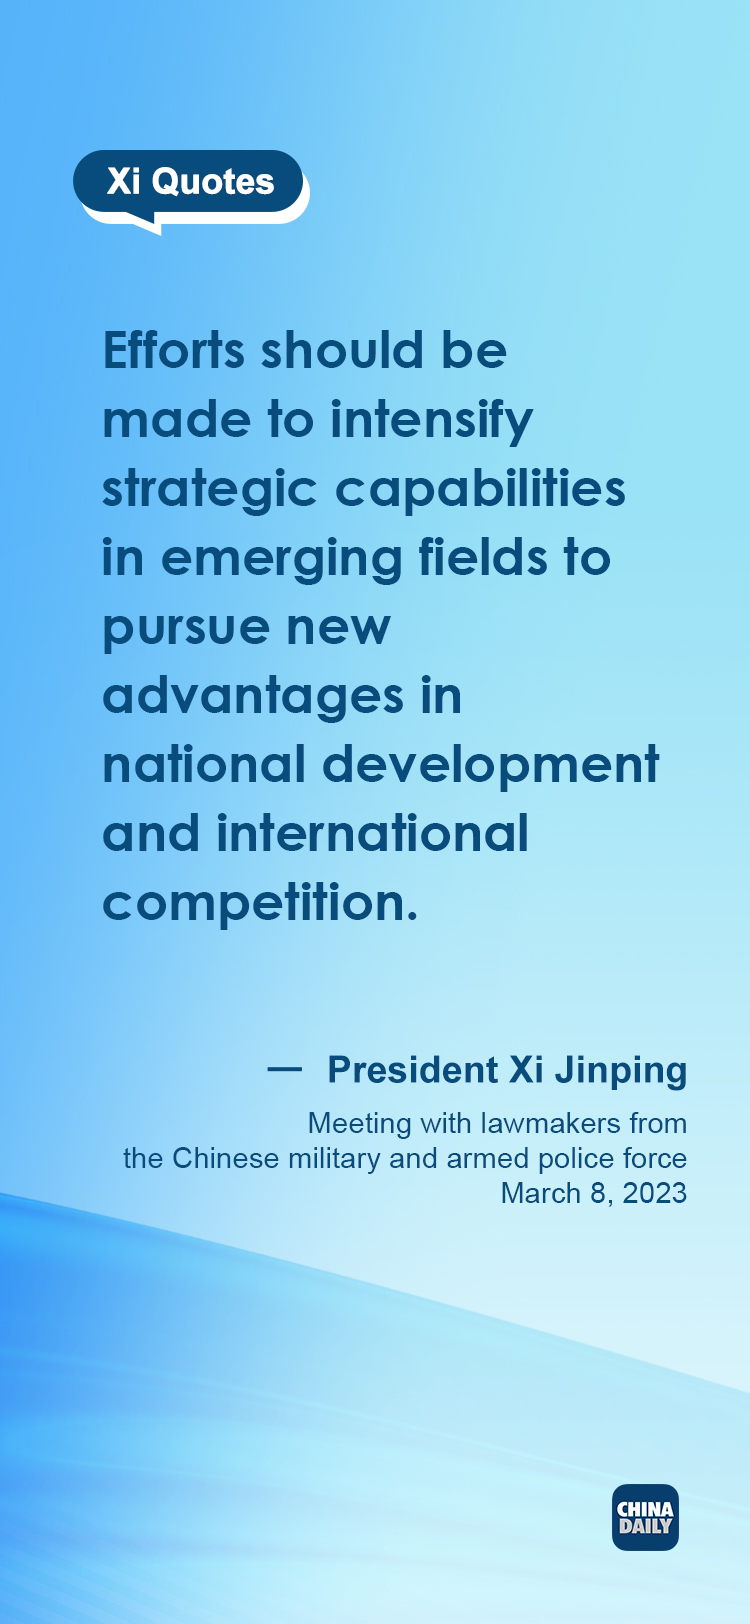 Xi's remarks on enhancing strategic capabilities